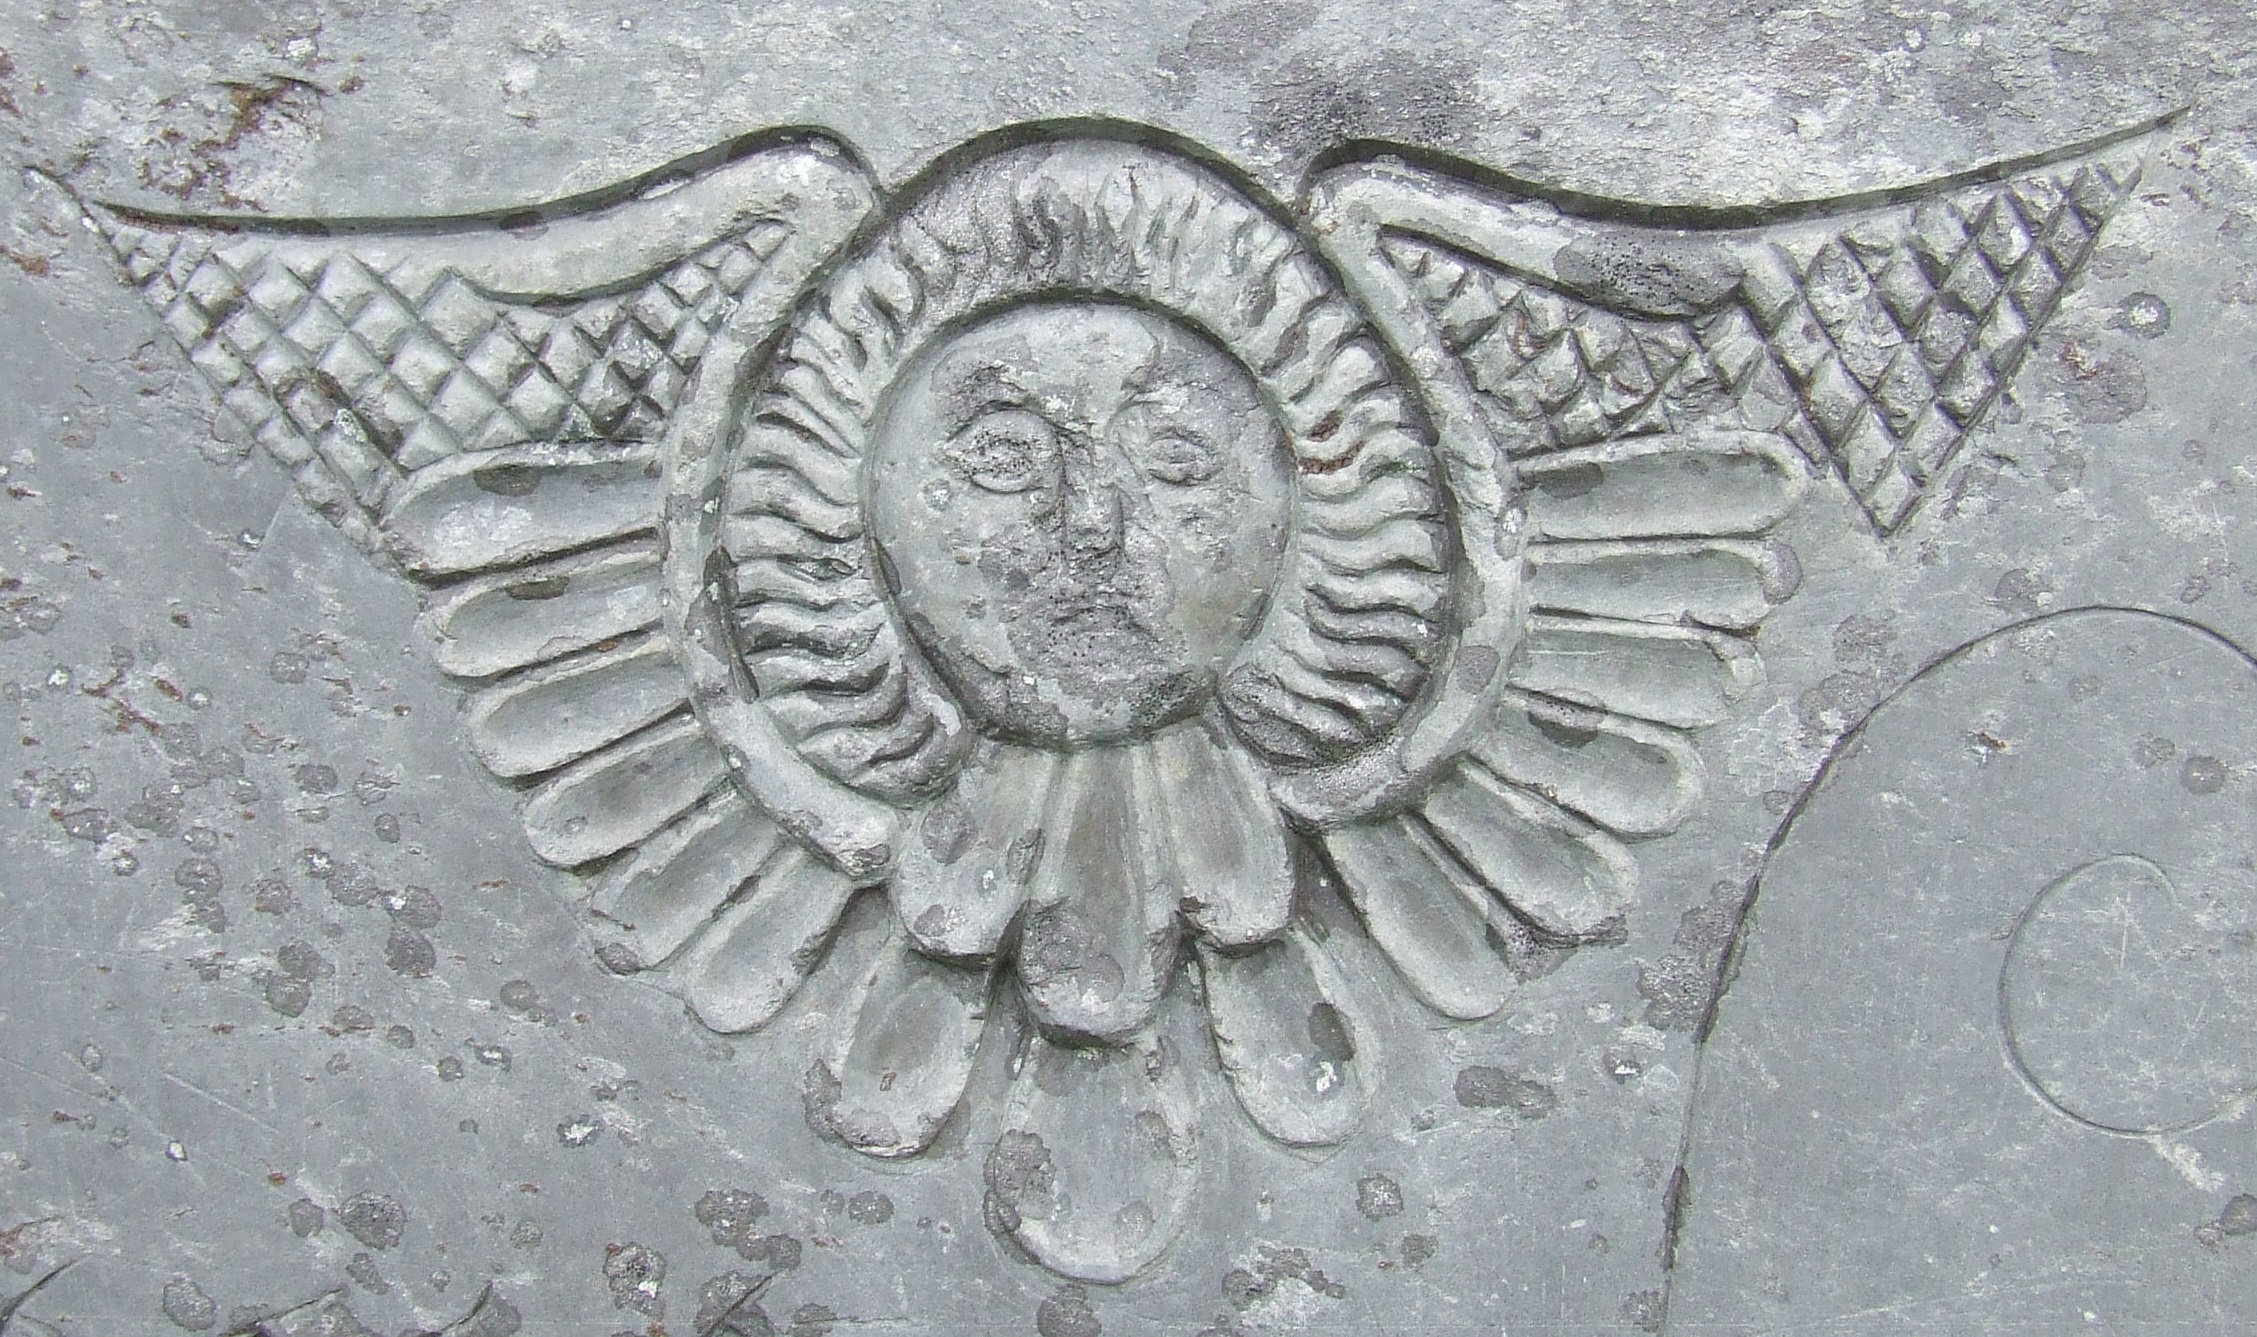 Carving of a cherub on a gravestone